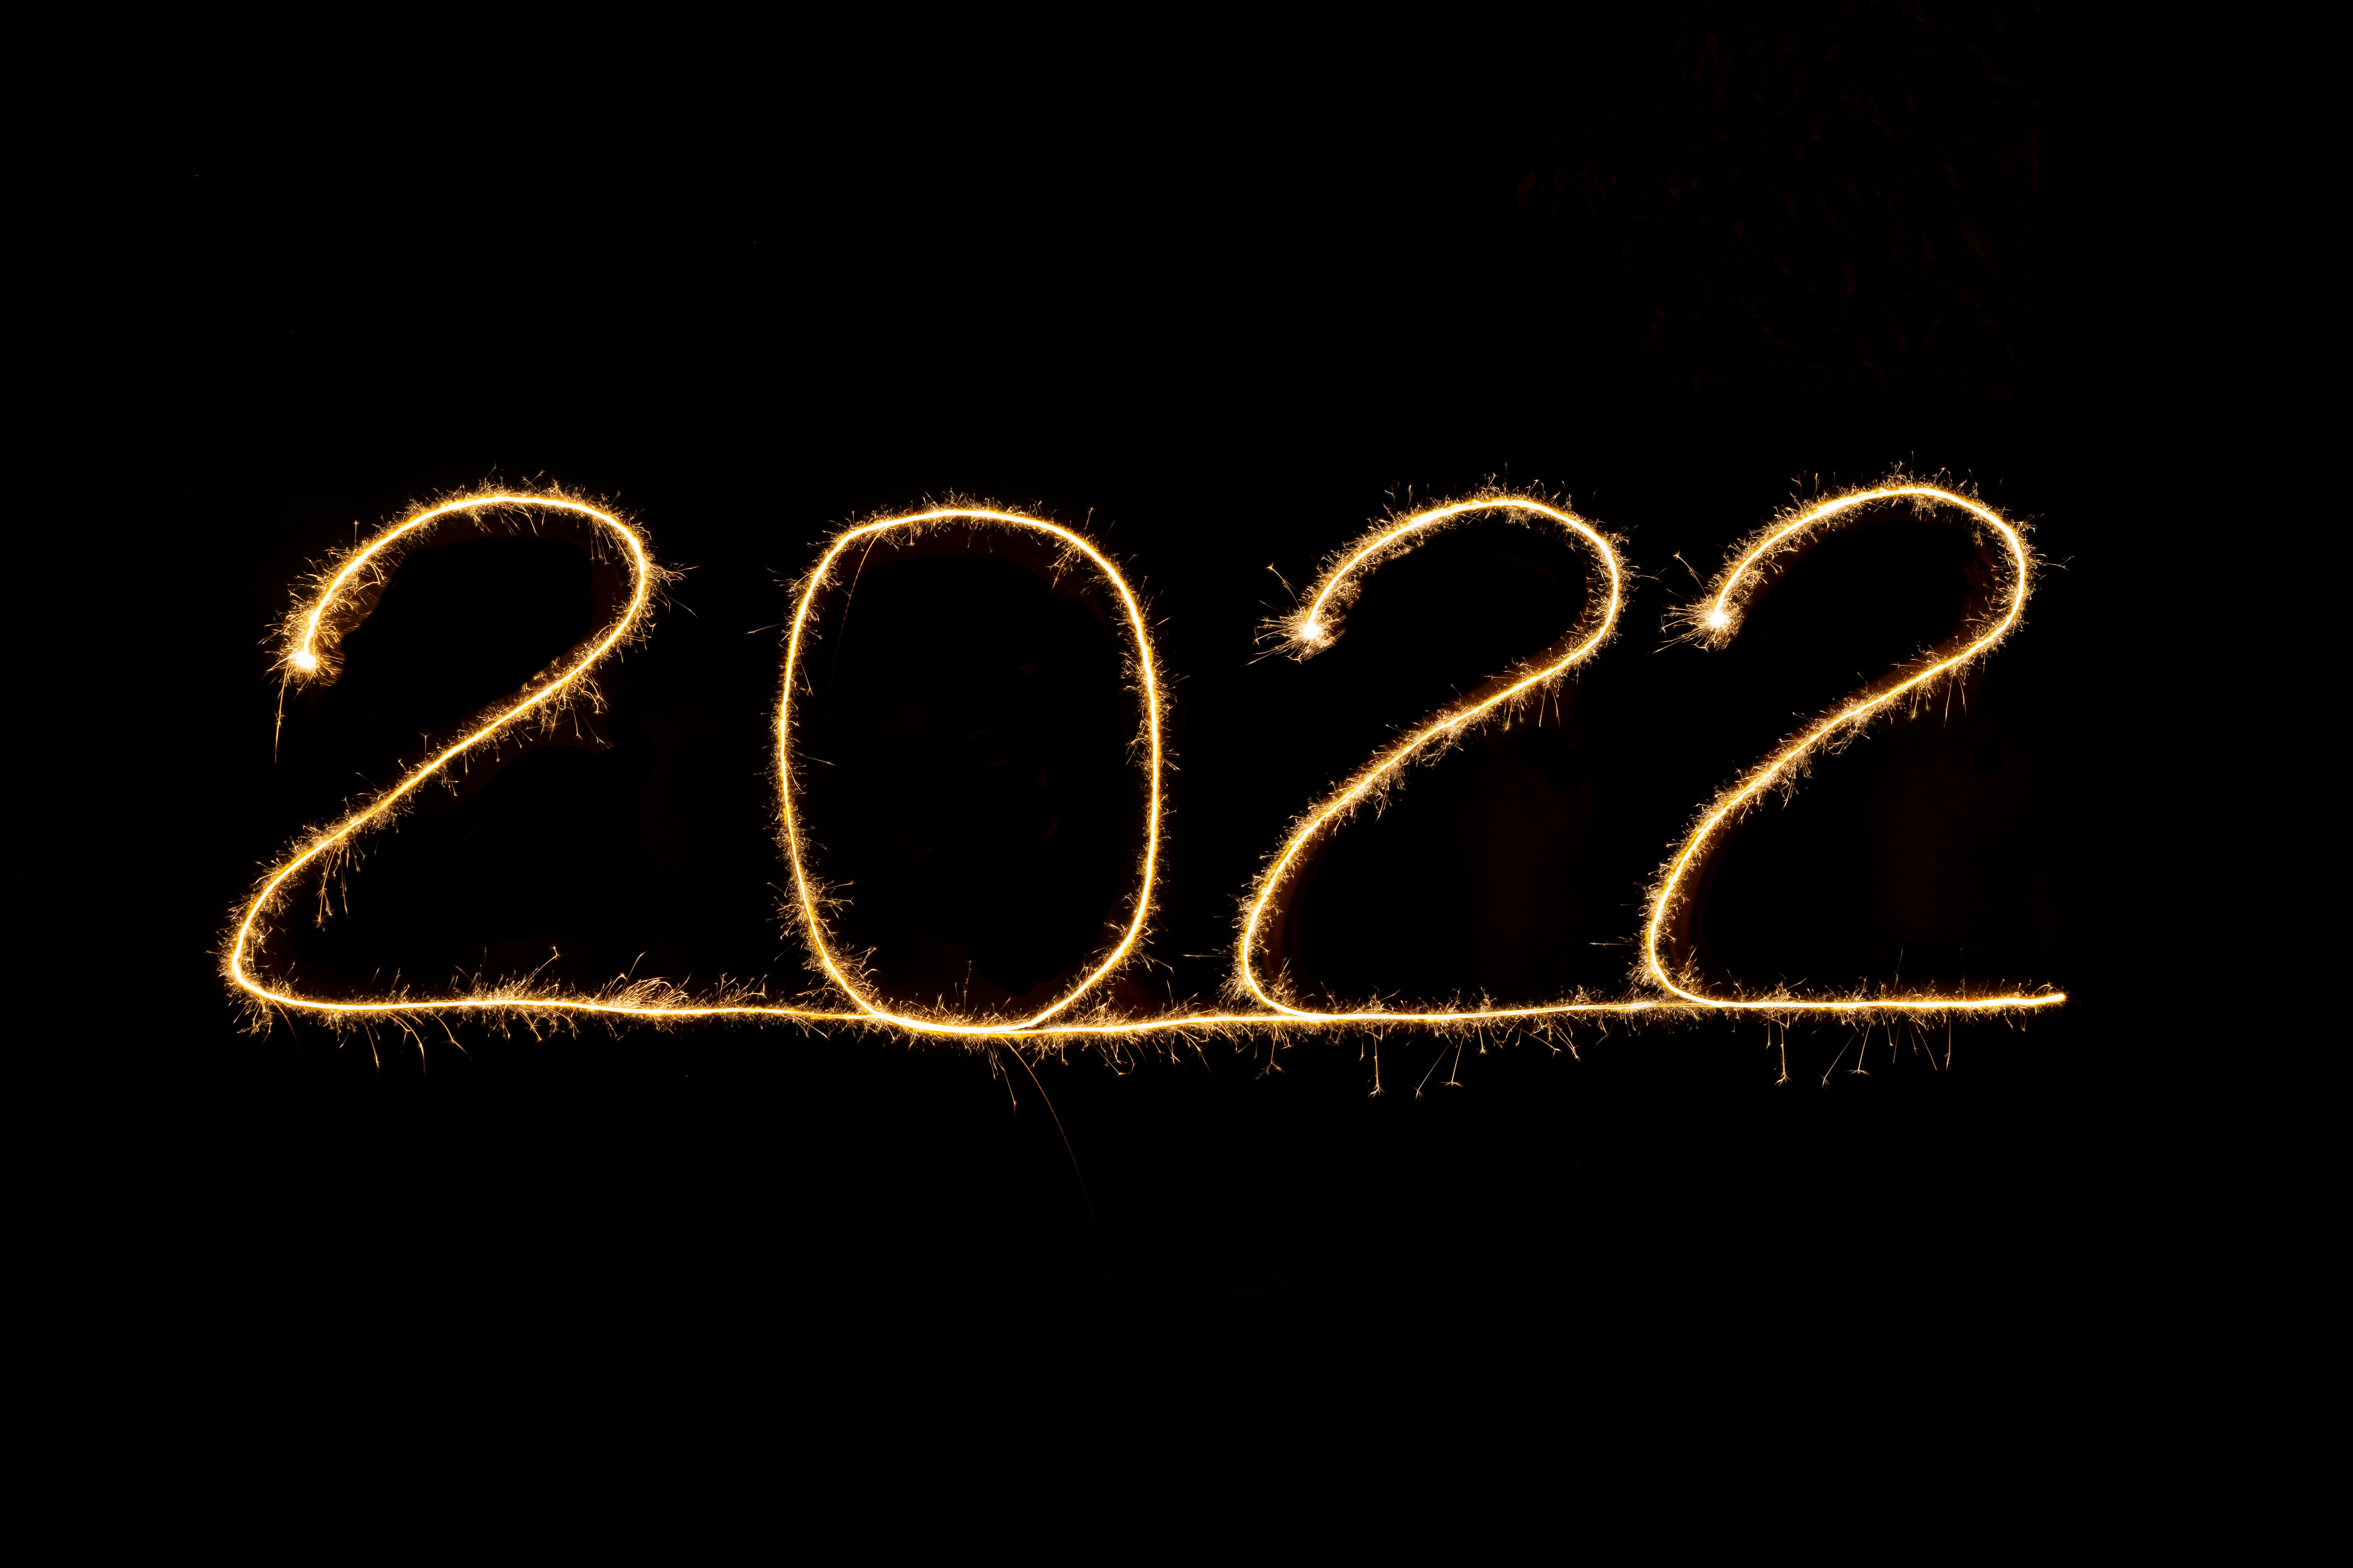 Looking forward to 2022 - COMING SOON